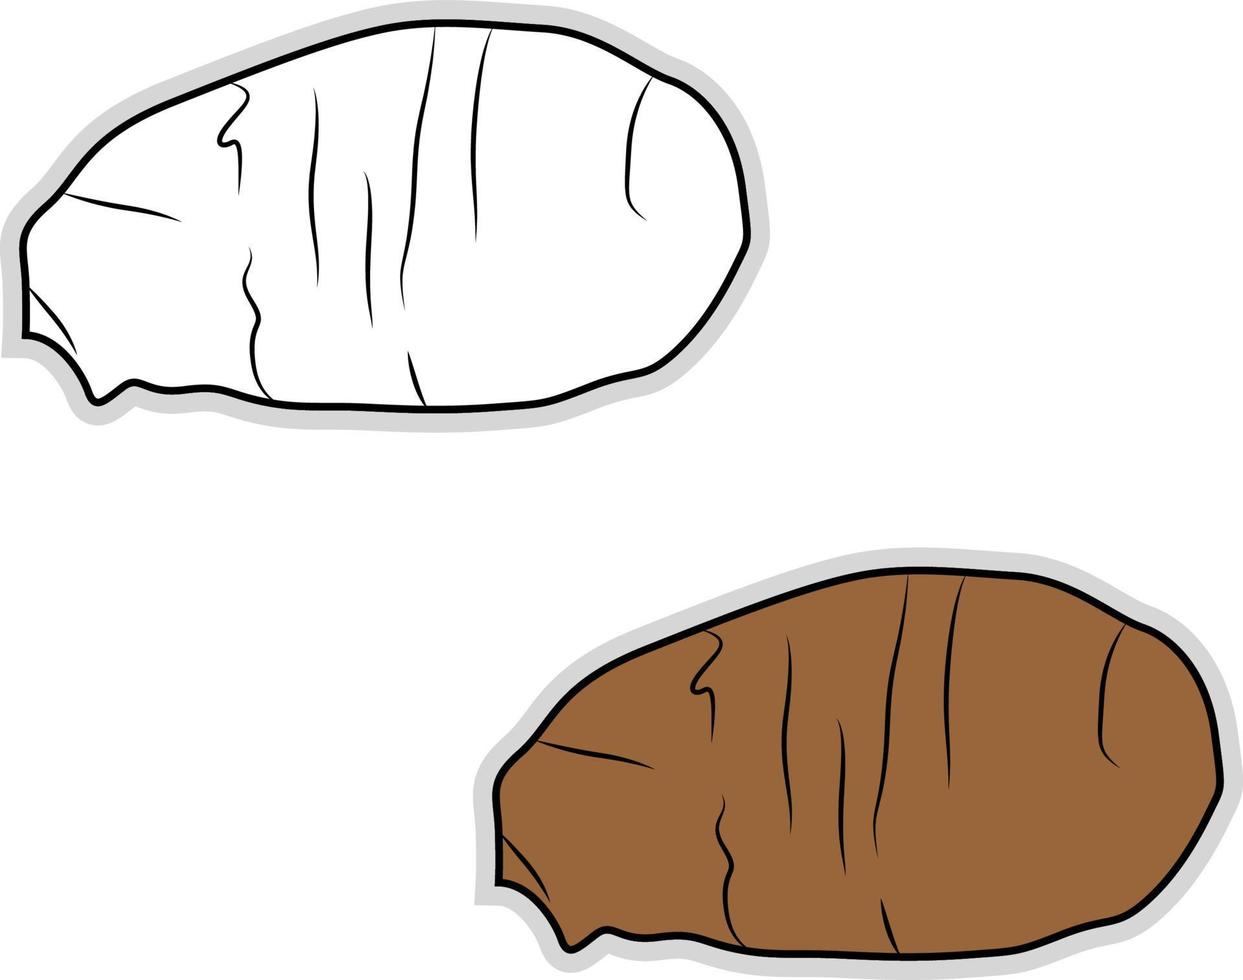 Eddoe brun, illustration, vecteur sur fond blanc.